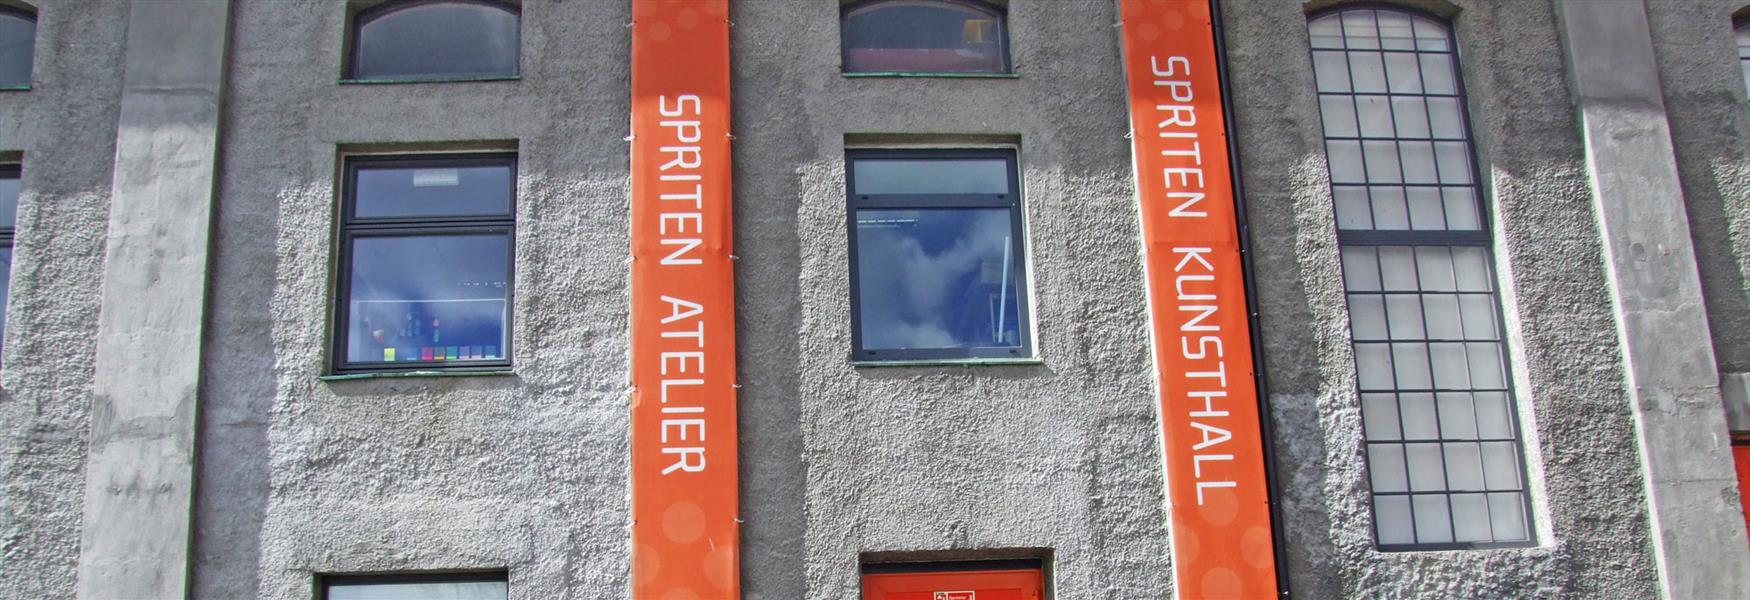 facade of Spriten Art Gallery